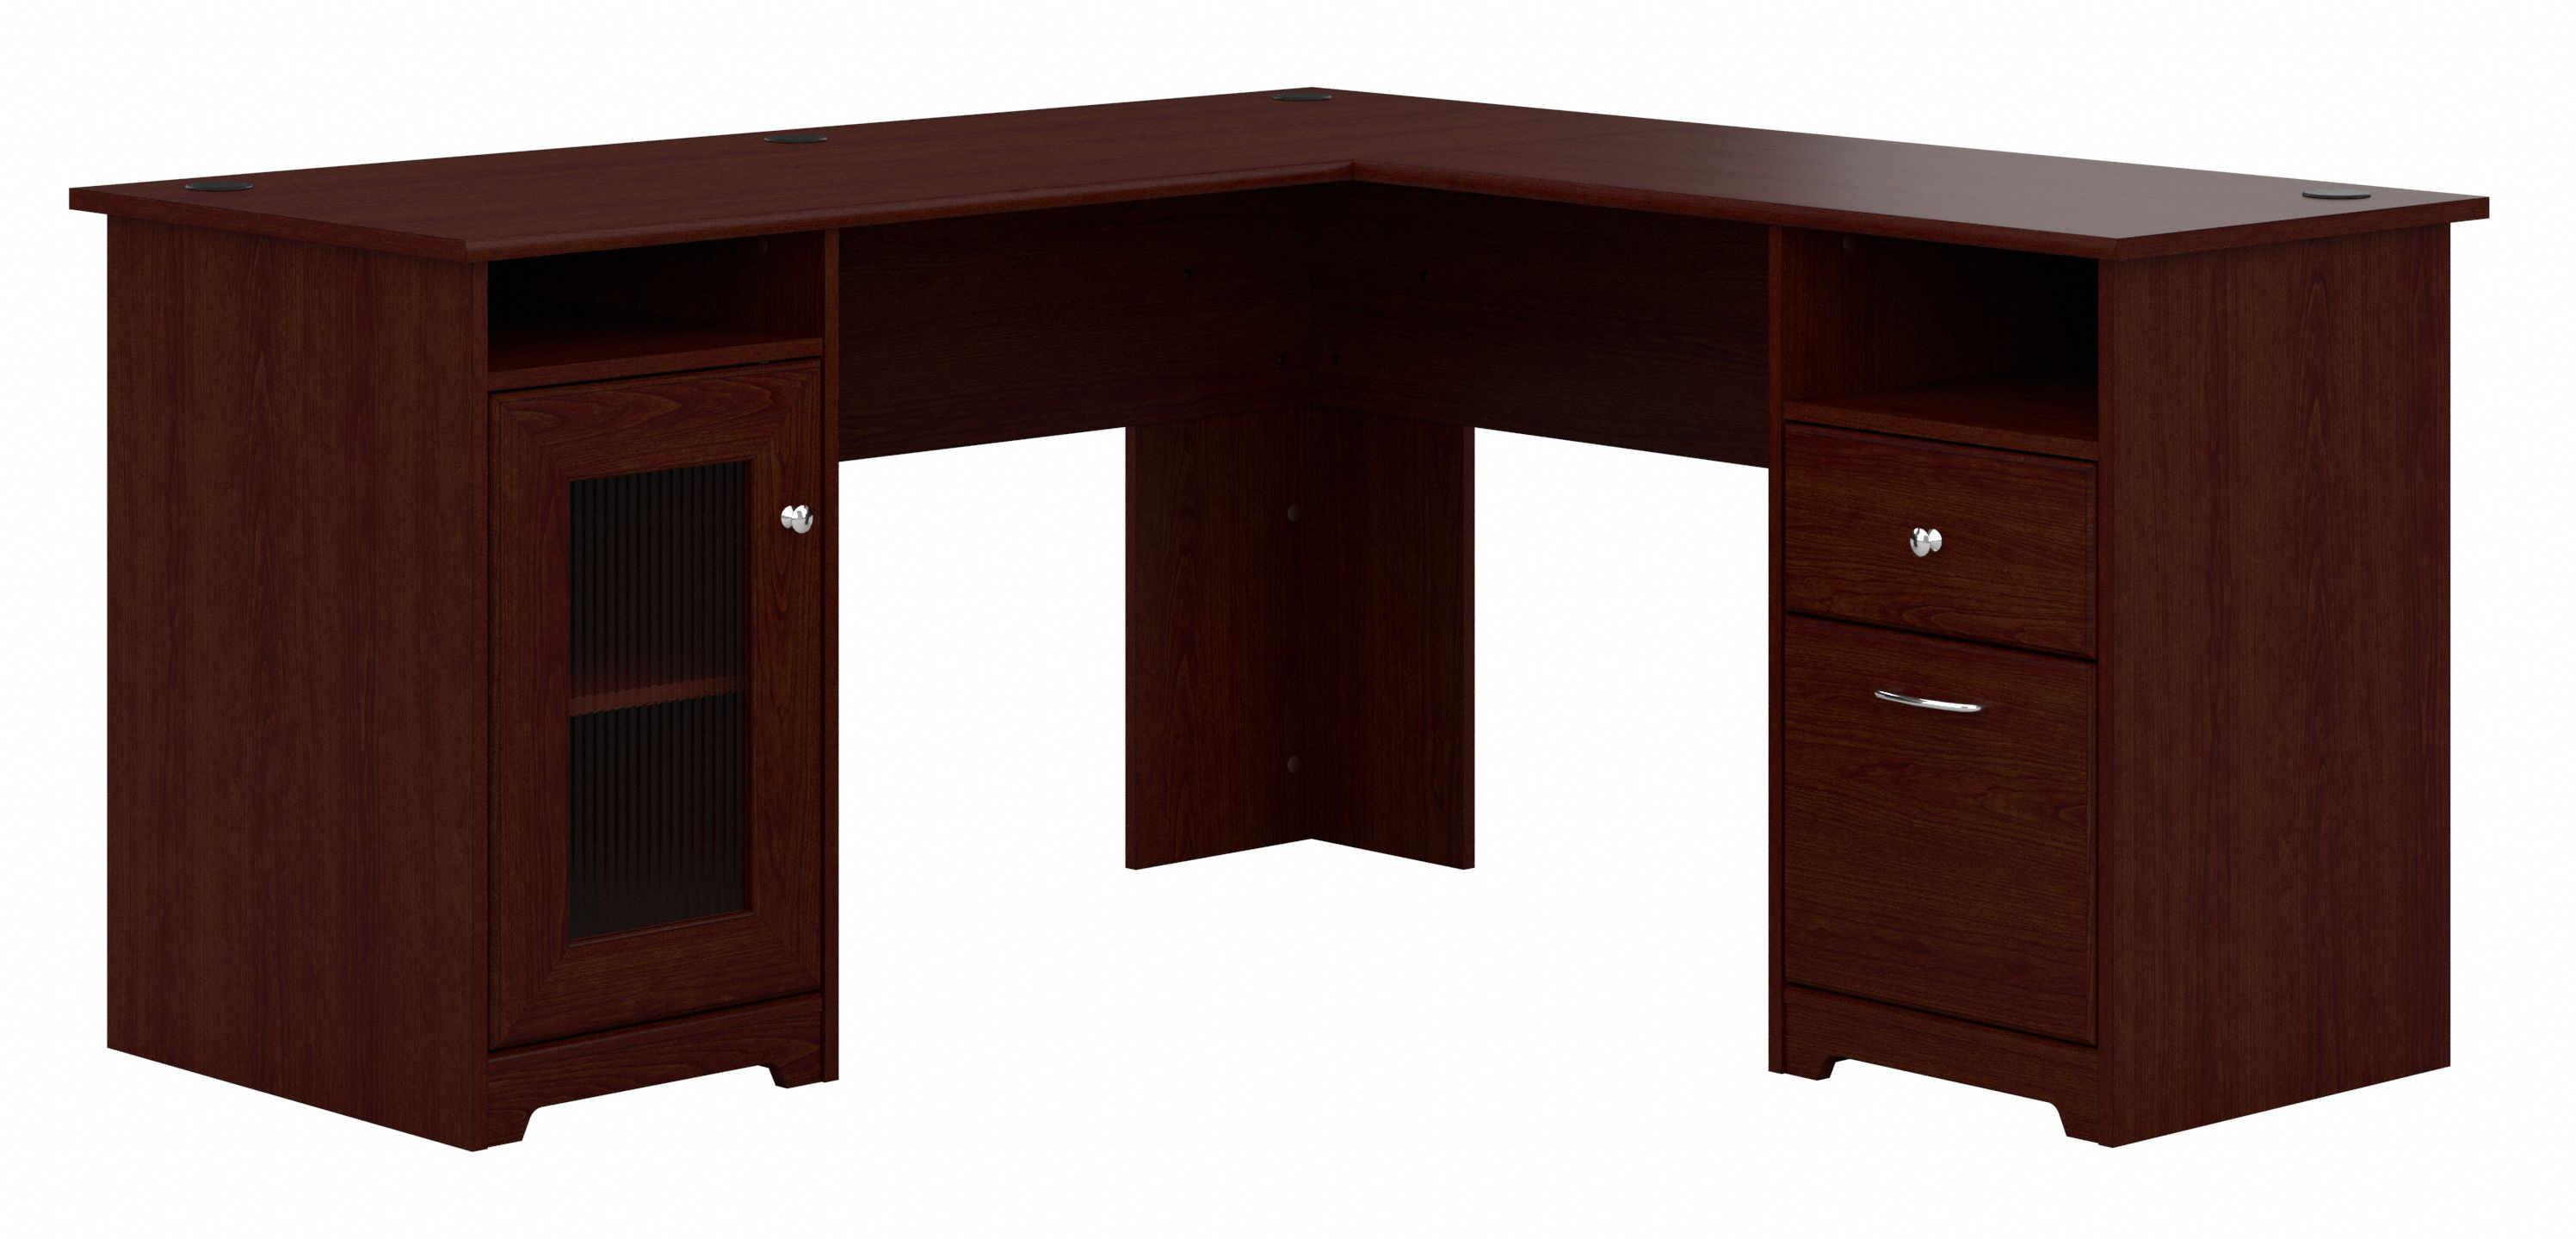 Shop Bush Furniture Cabot 60W L Shaped Computer Desk with Storage 02 WC31430K #color_harvest cherry